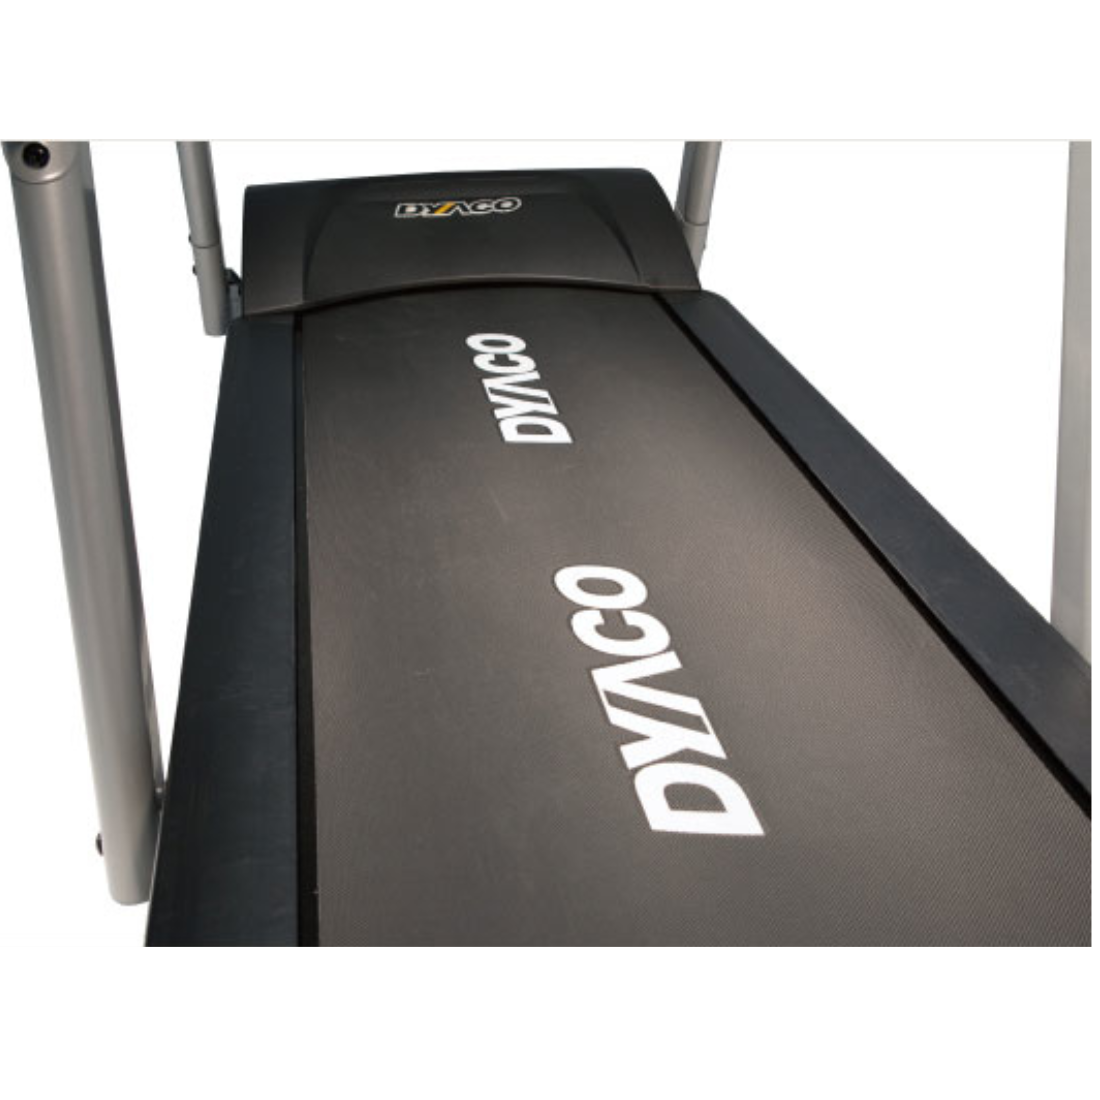 dyaco lw80 treadmill walking surface